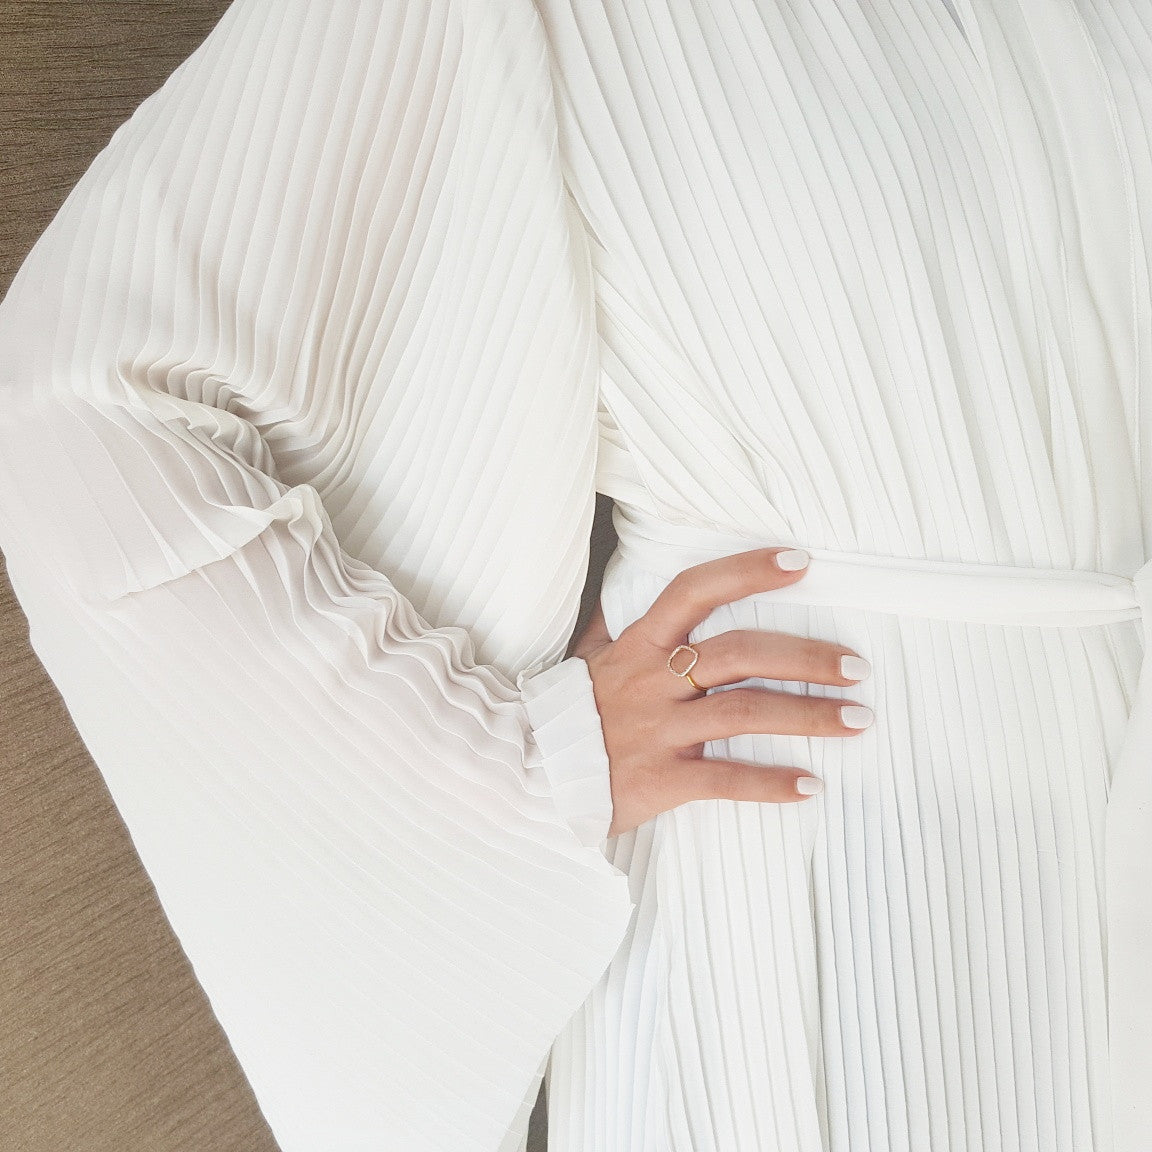 Stunning White Pleated Abaya With High Collar